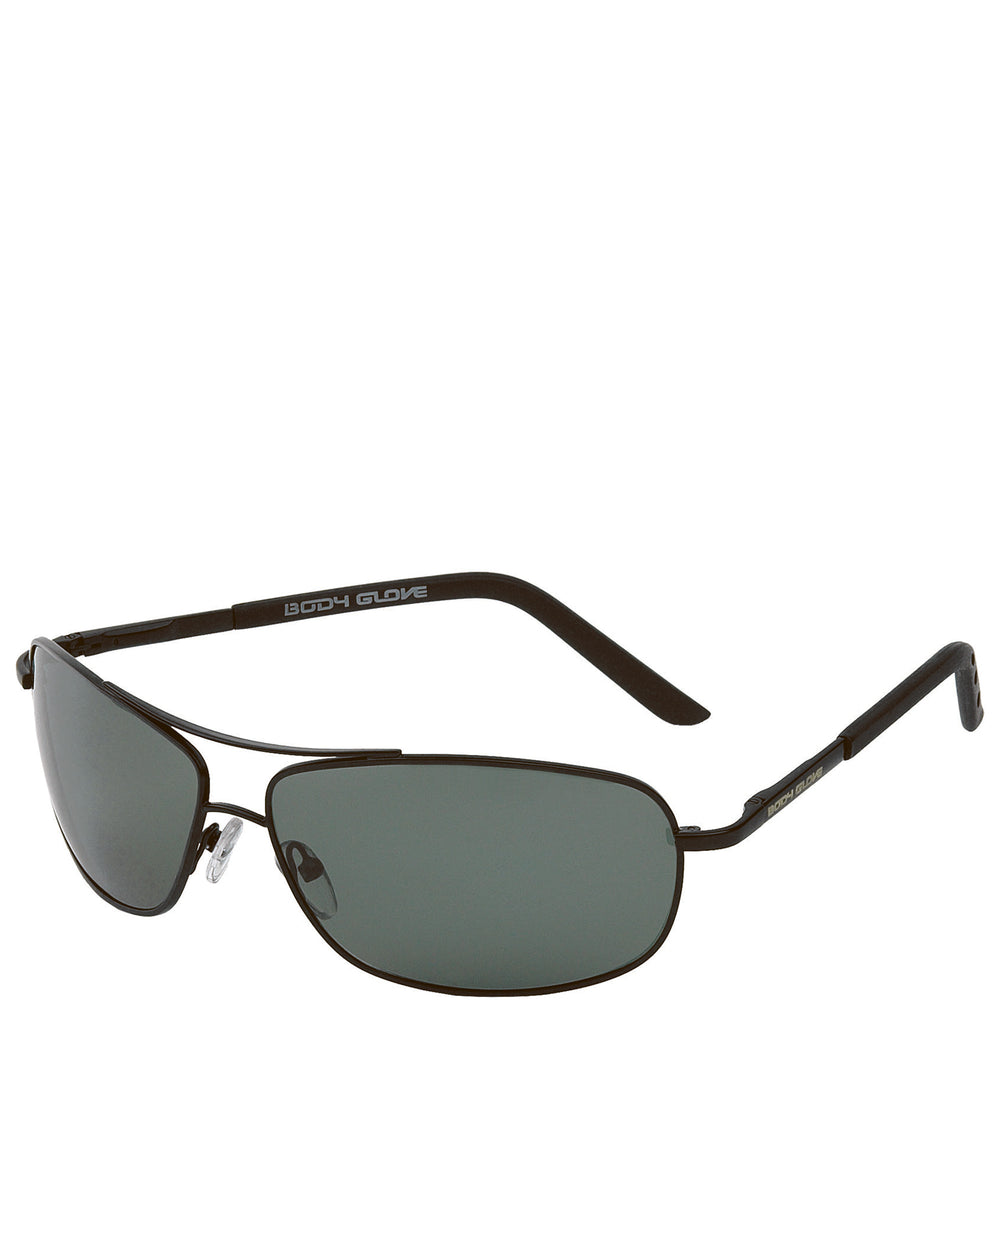 Men's Maui Polarized Sunglasses - Dark Gun